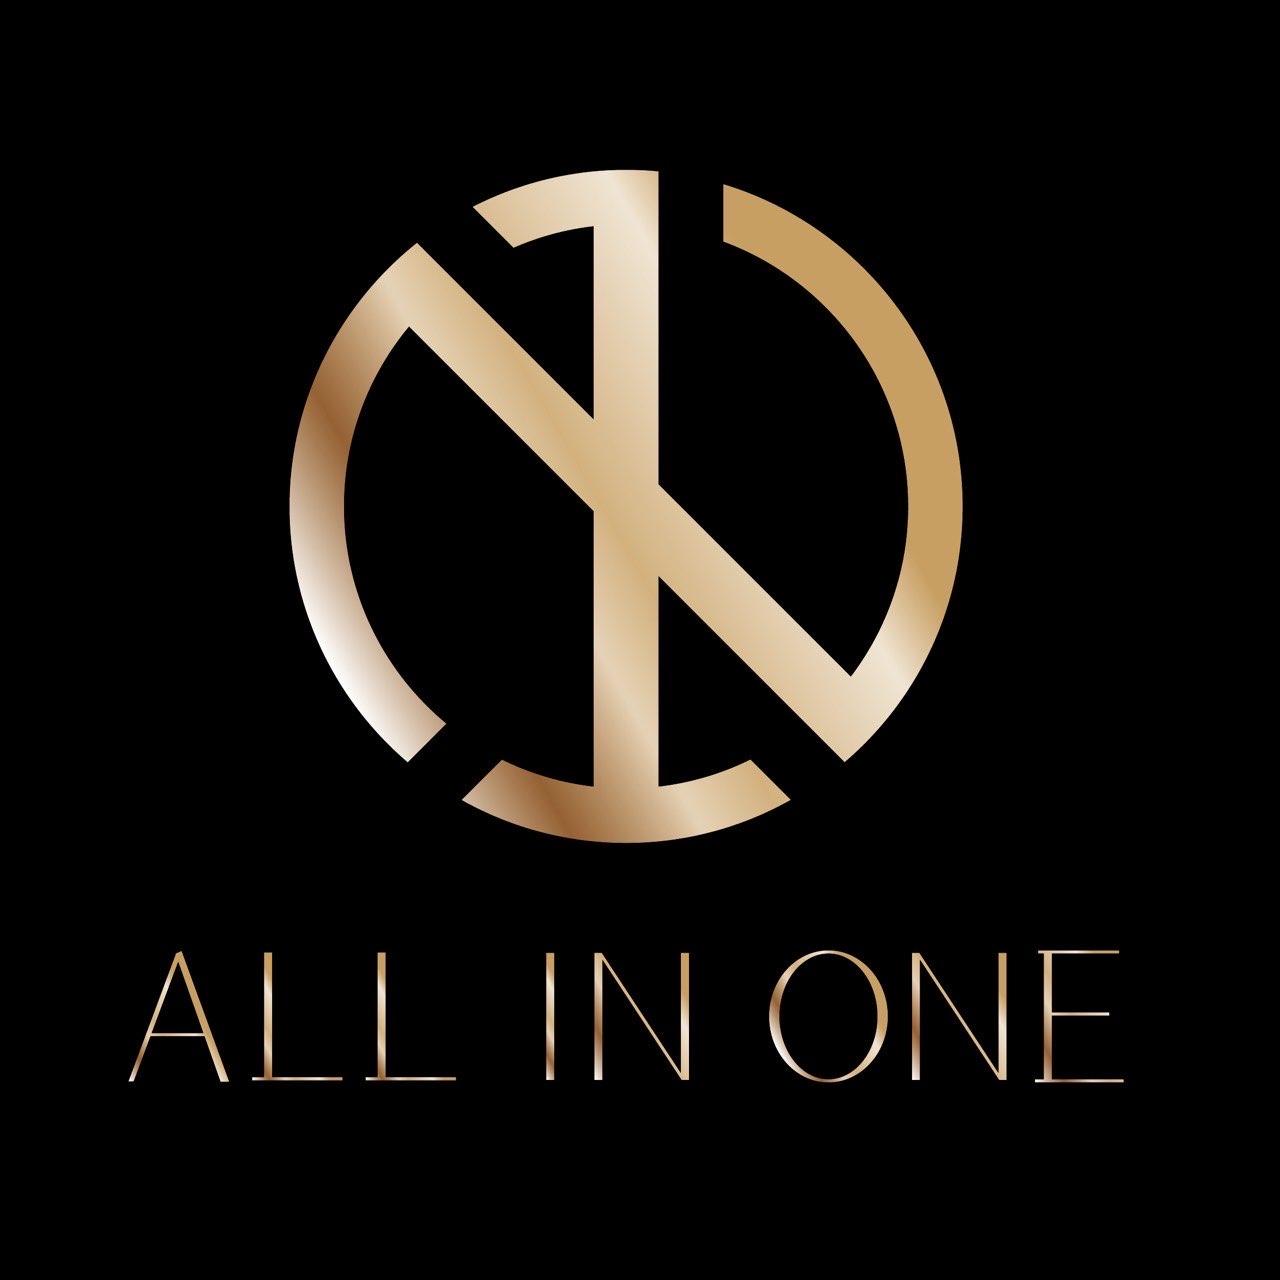 Allinone團體街舞課程 - All in one